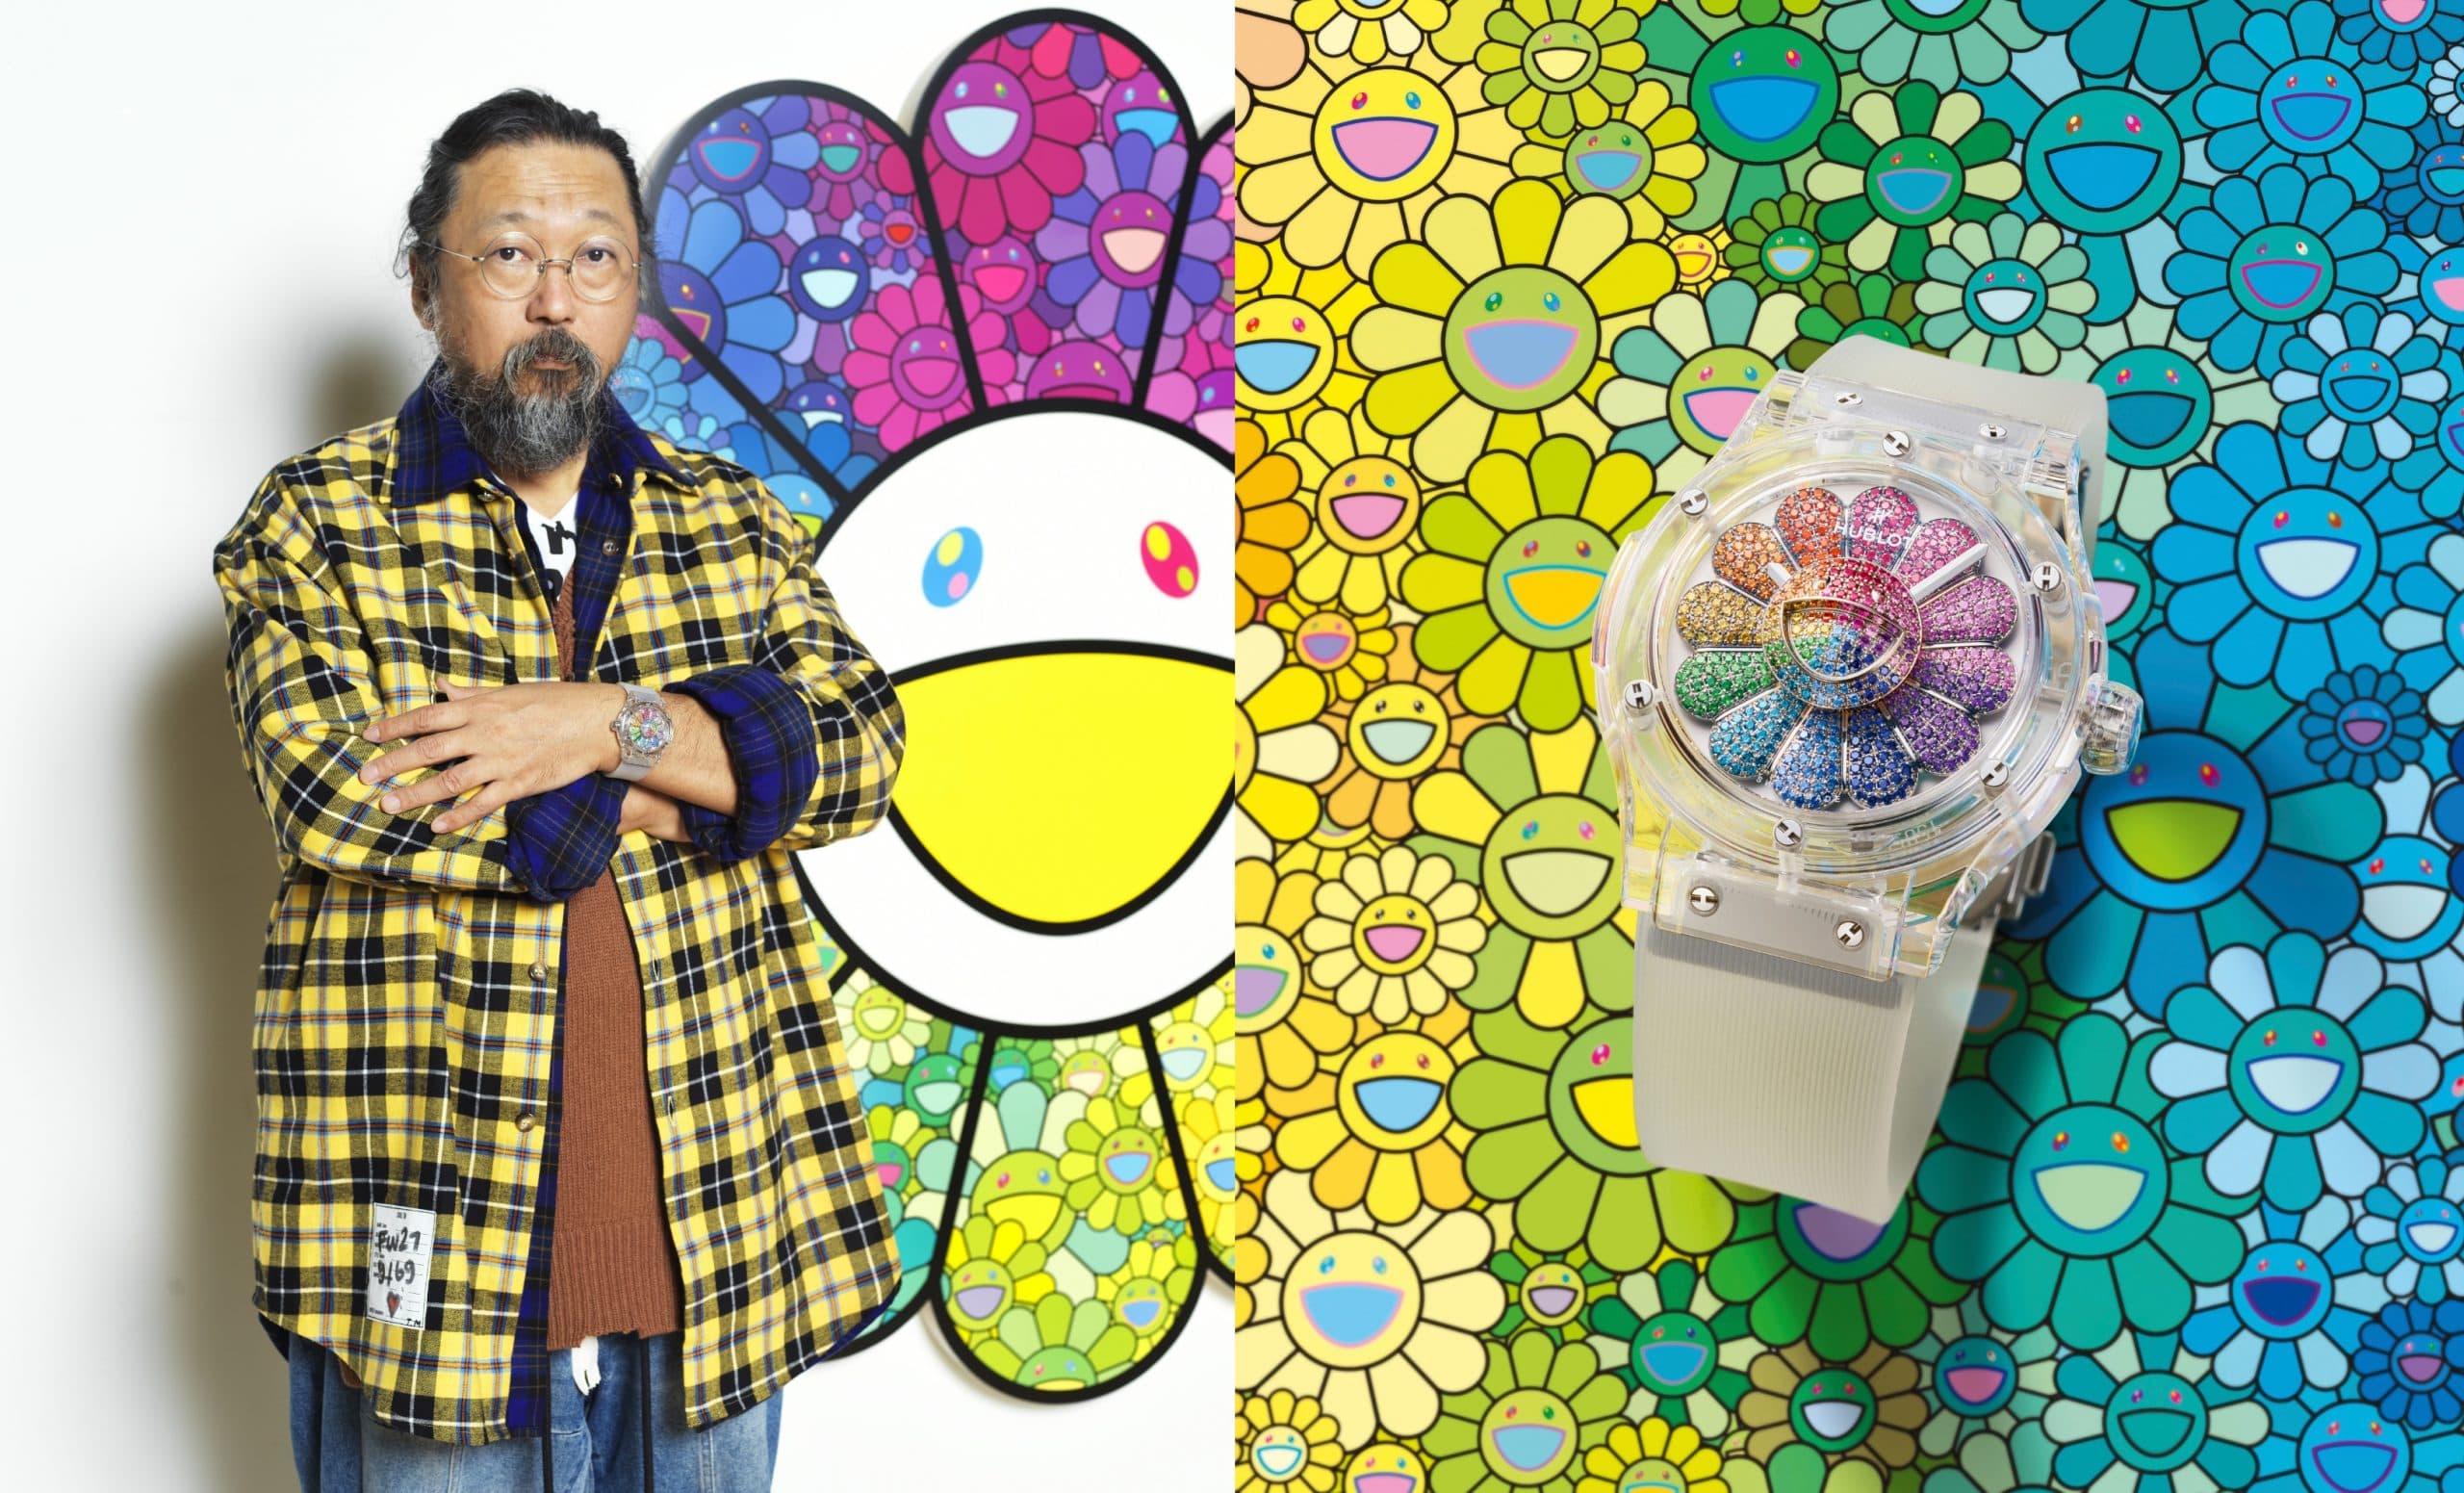 Hublot And Takashi Murakami Unveil New Watch Collaboration - The